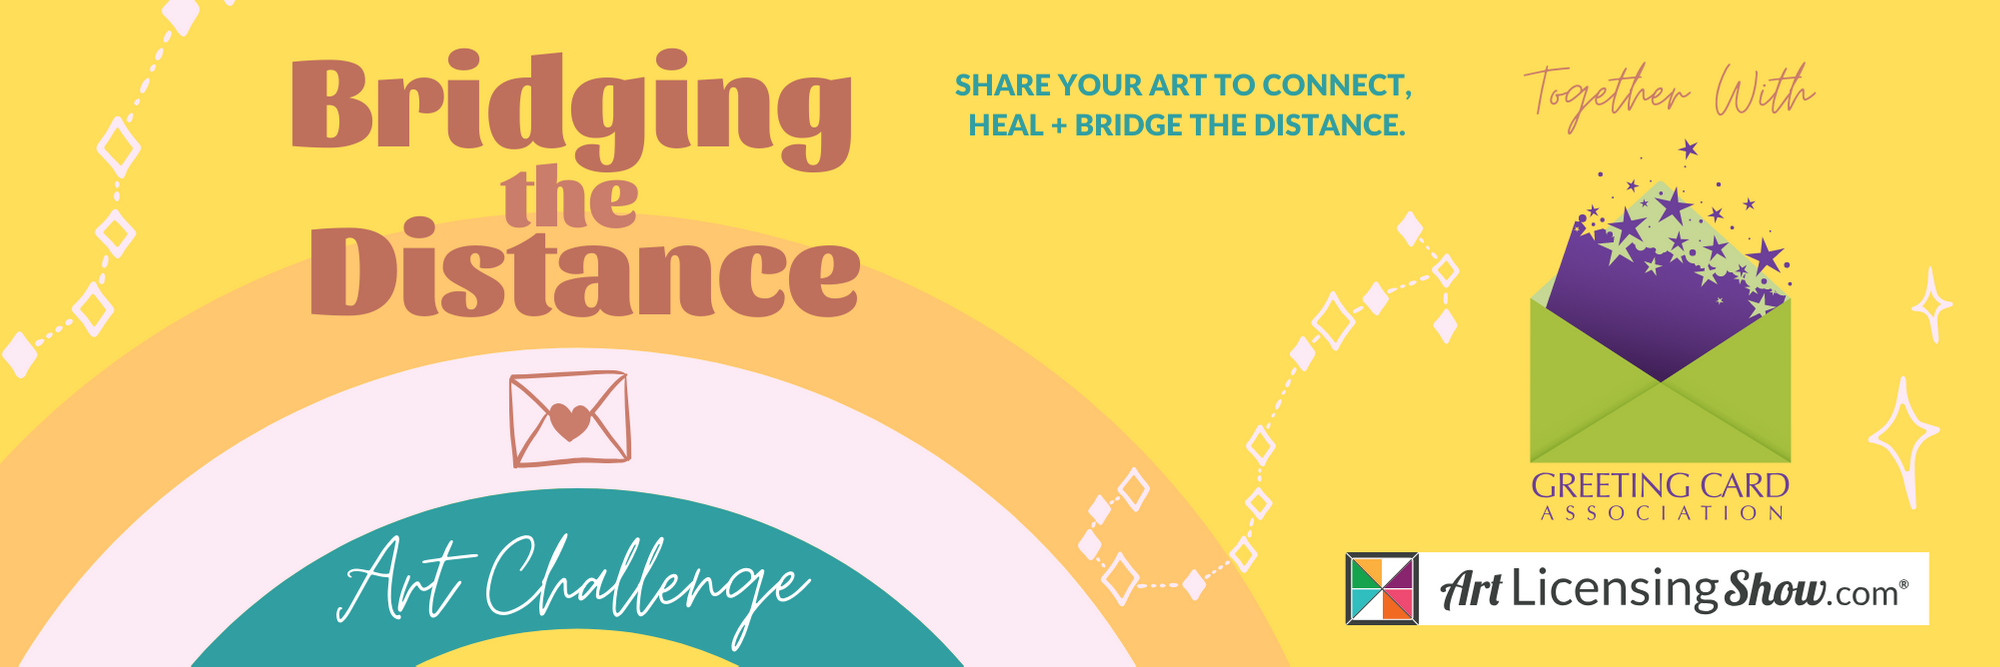 Bridging-the-distance-blog-art-licensing-show-greeting-card-association